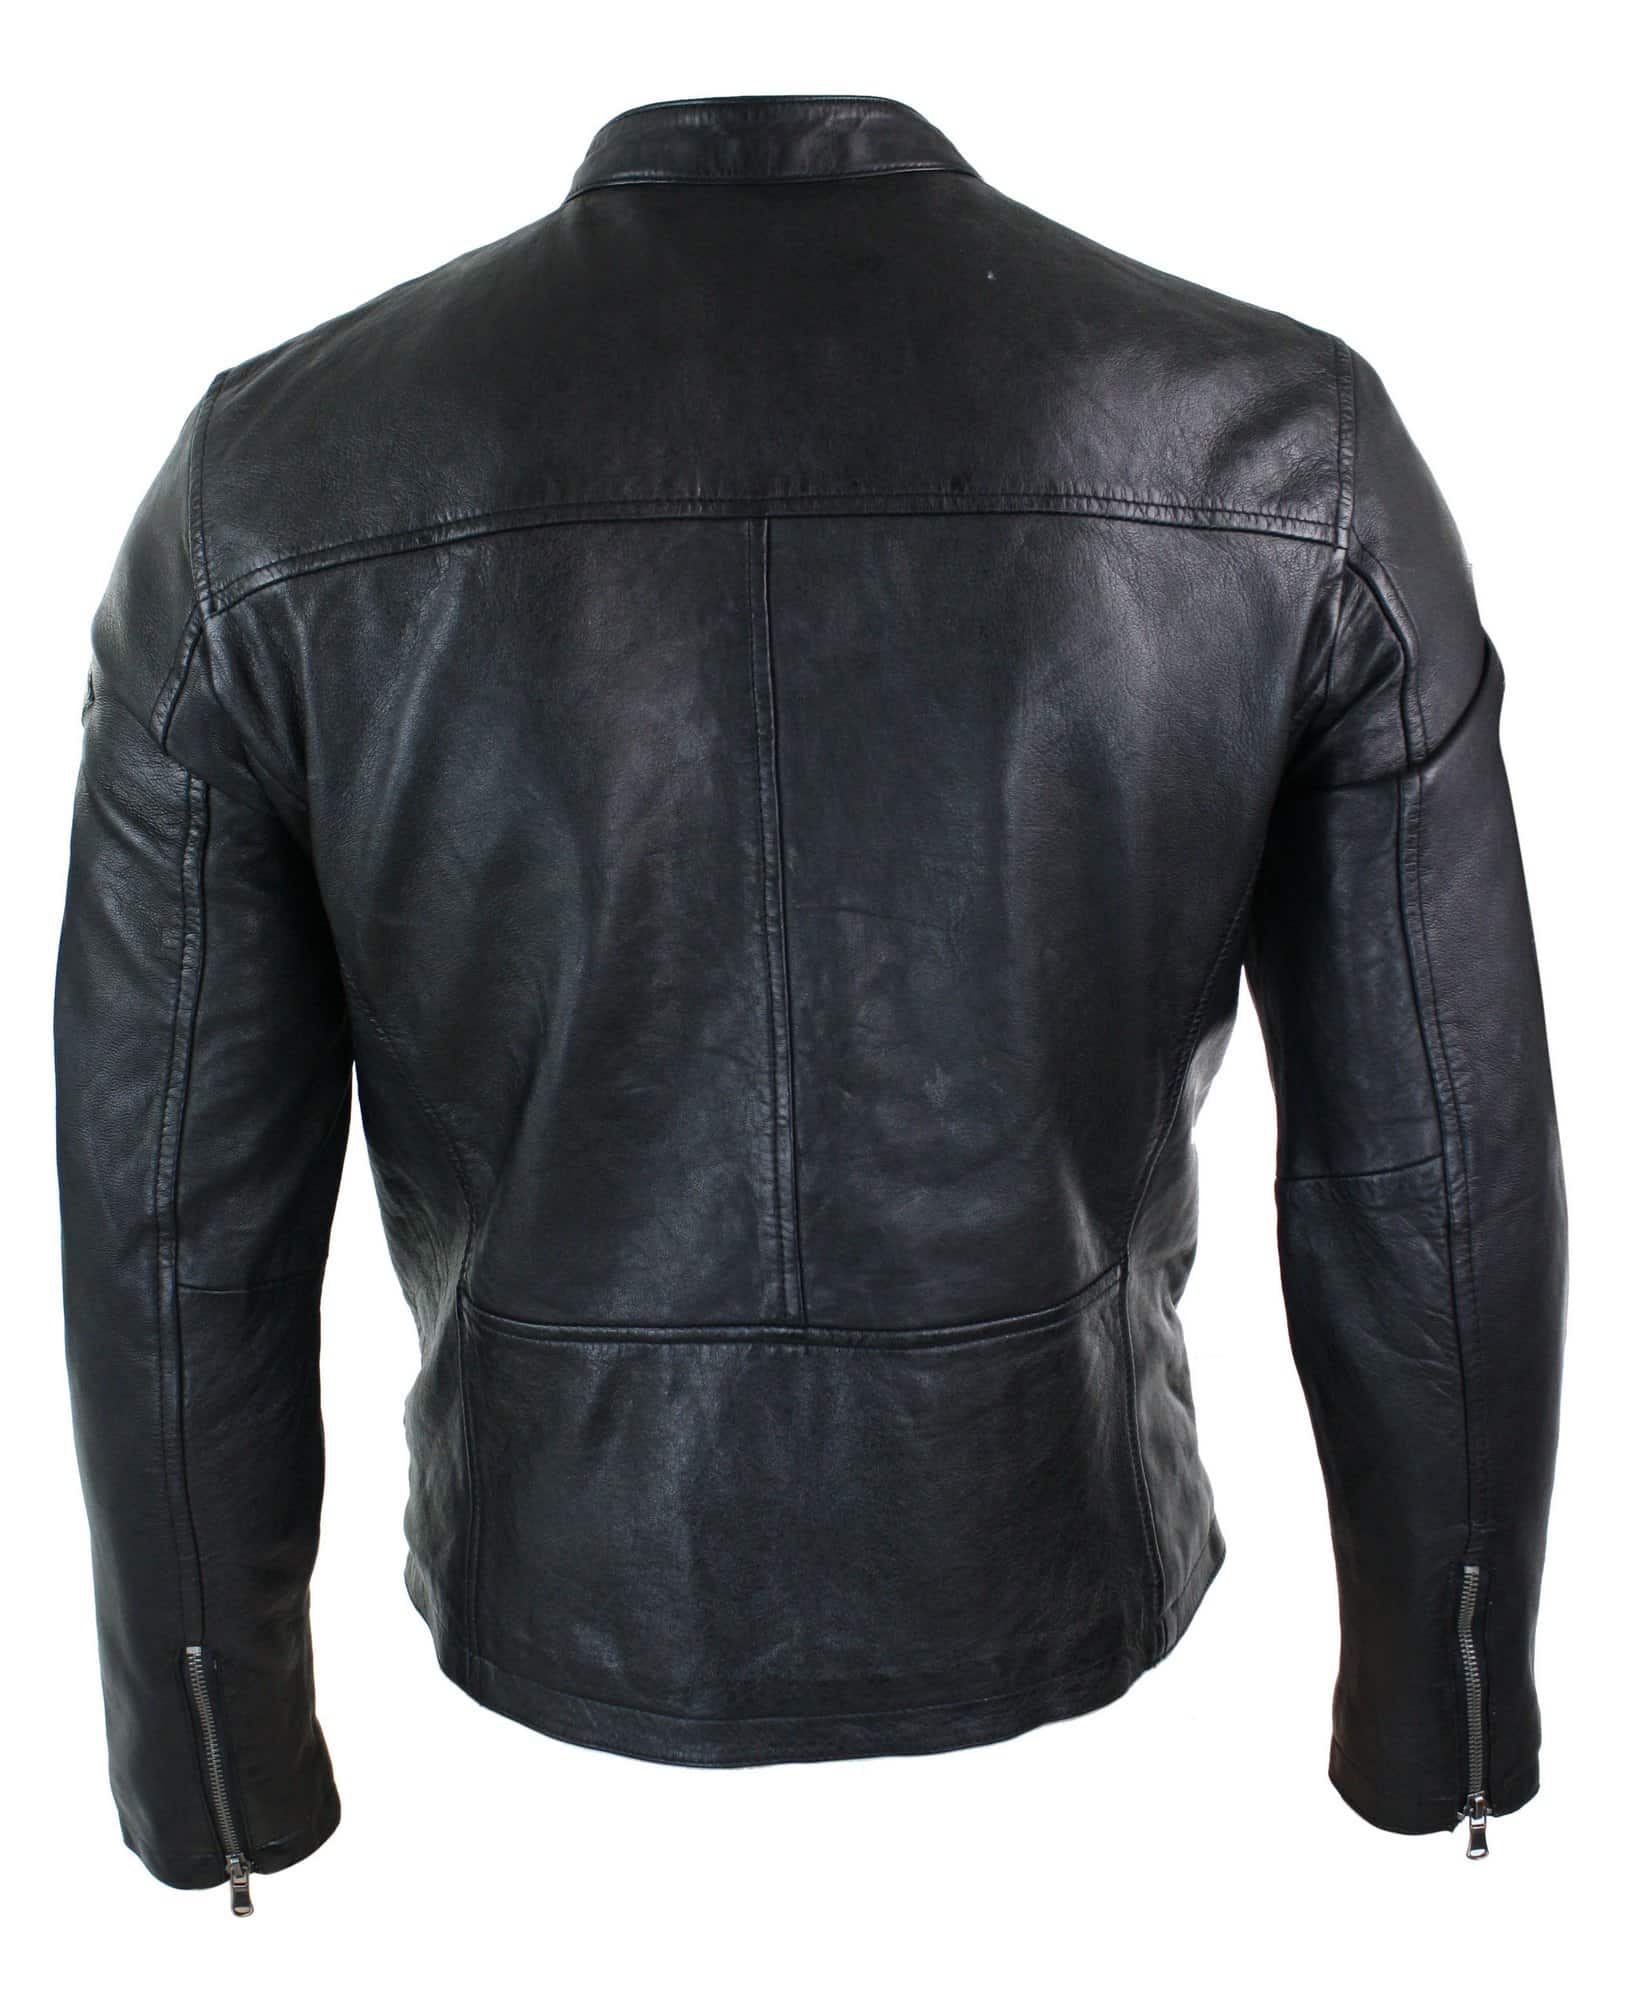 Infinity Chicago - Mens Black Short Zipped Slim Fit Racing Biker Jacket ...